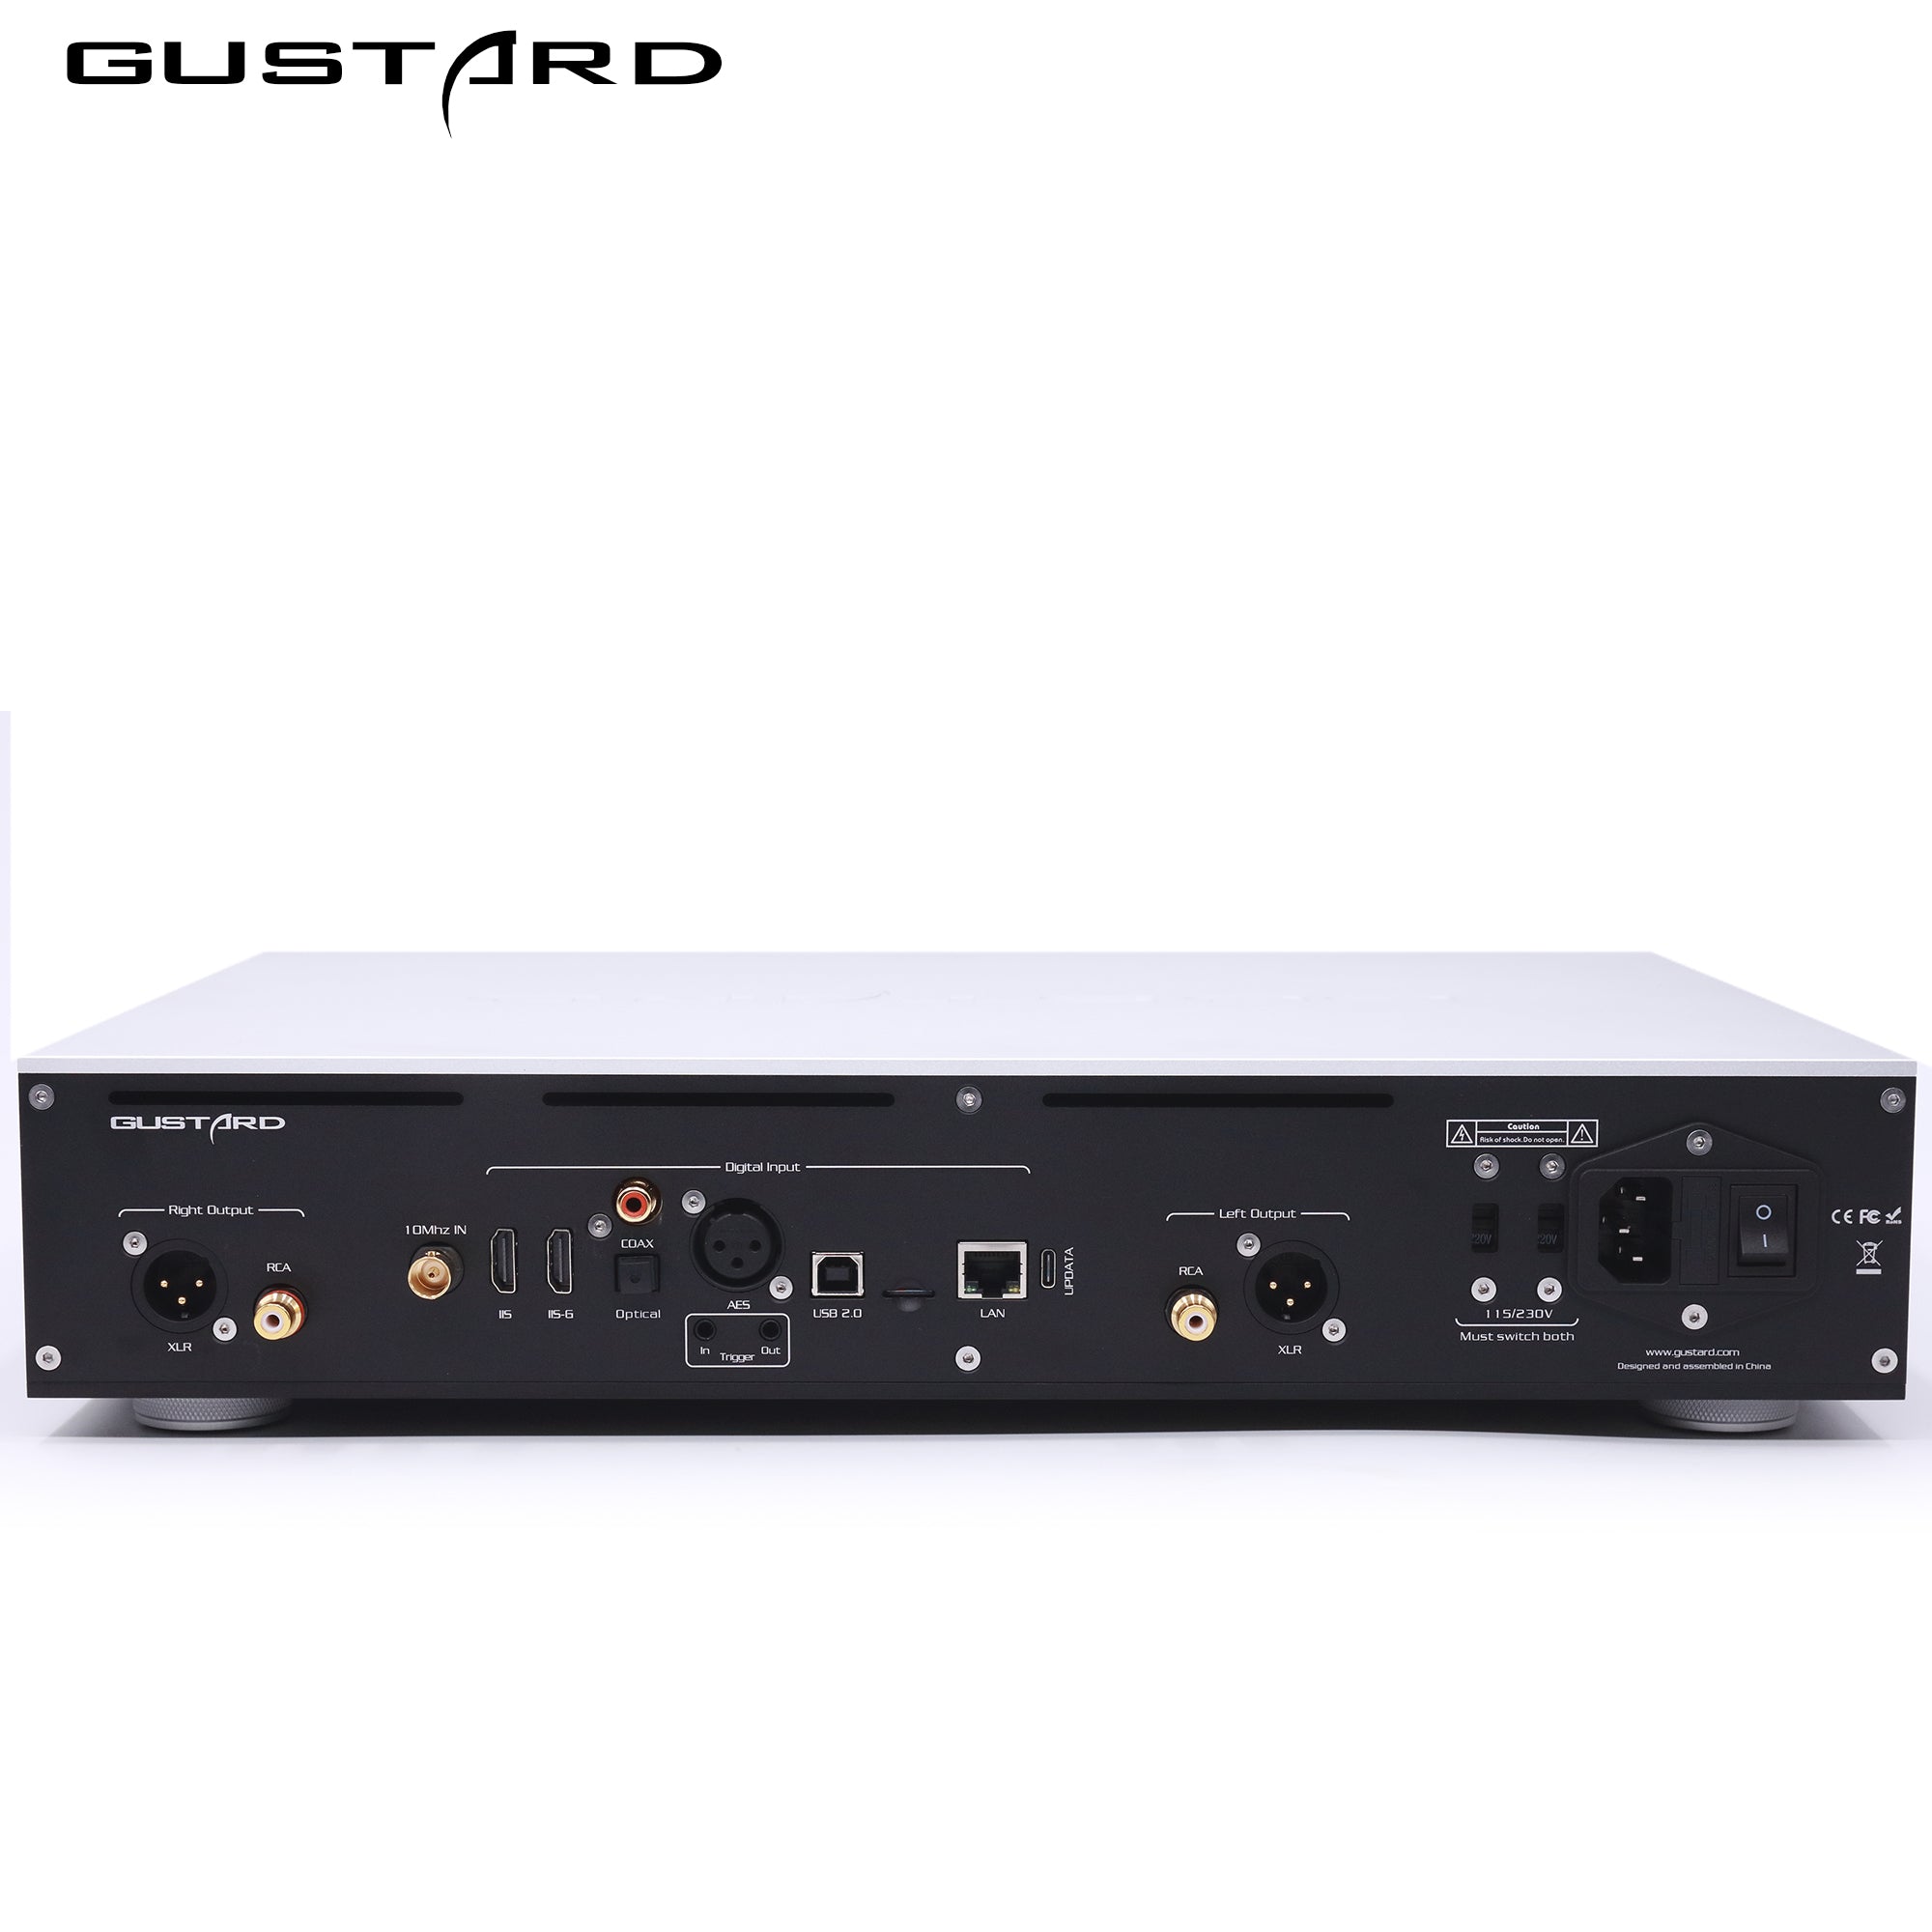 GUSTARD DAC-X30